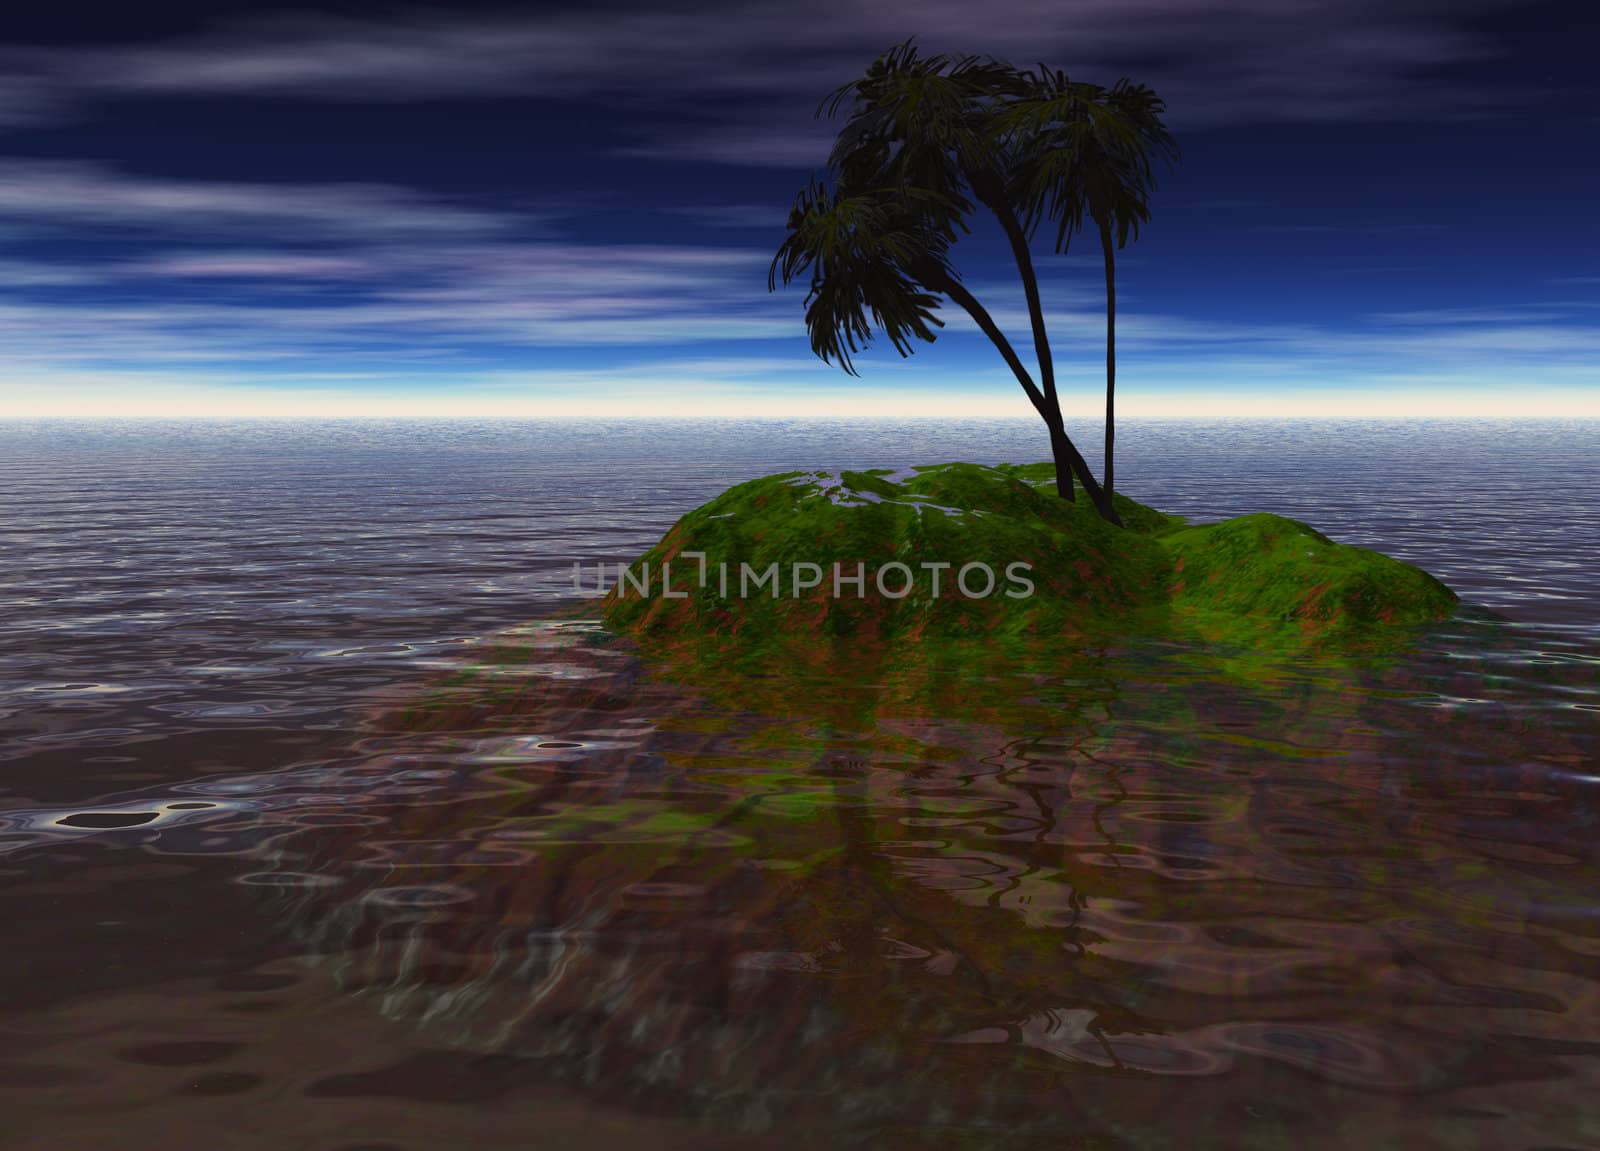 Romantic Desert Island with Palm Tree against the Horizon